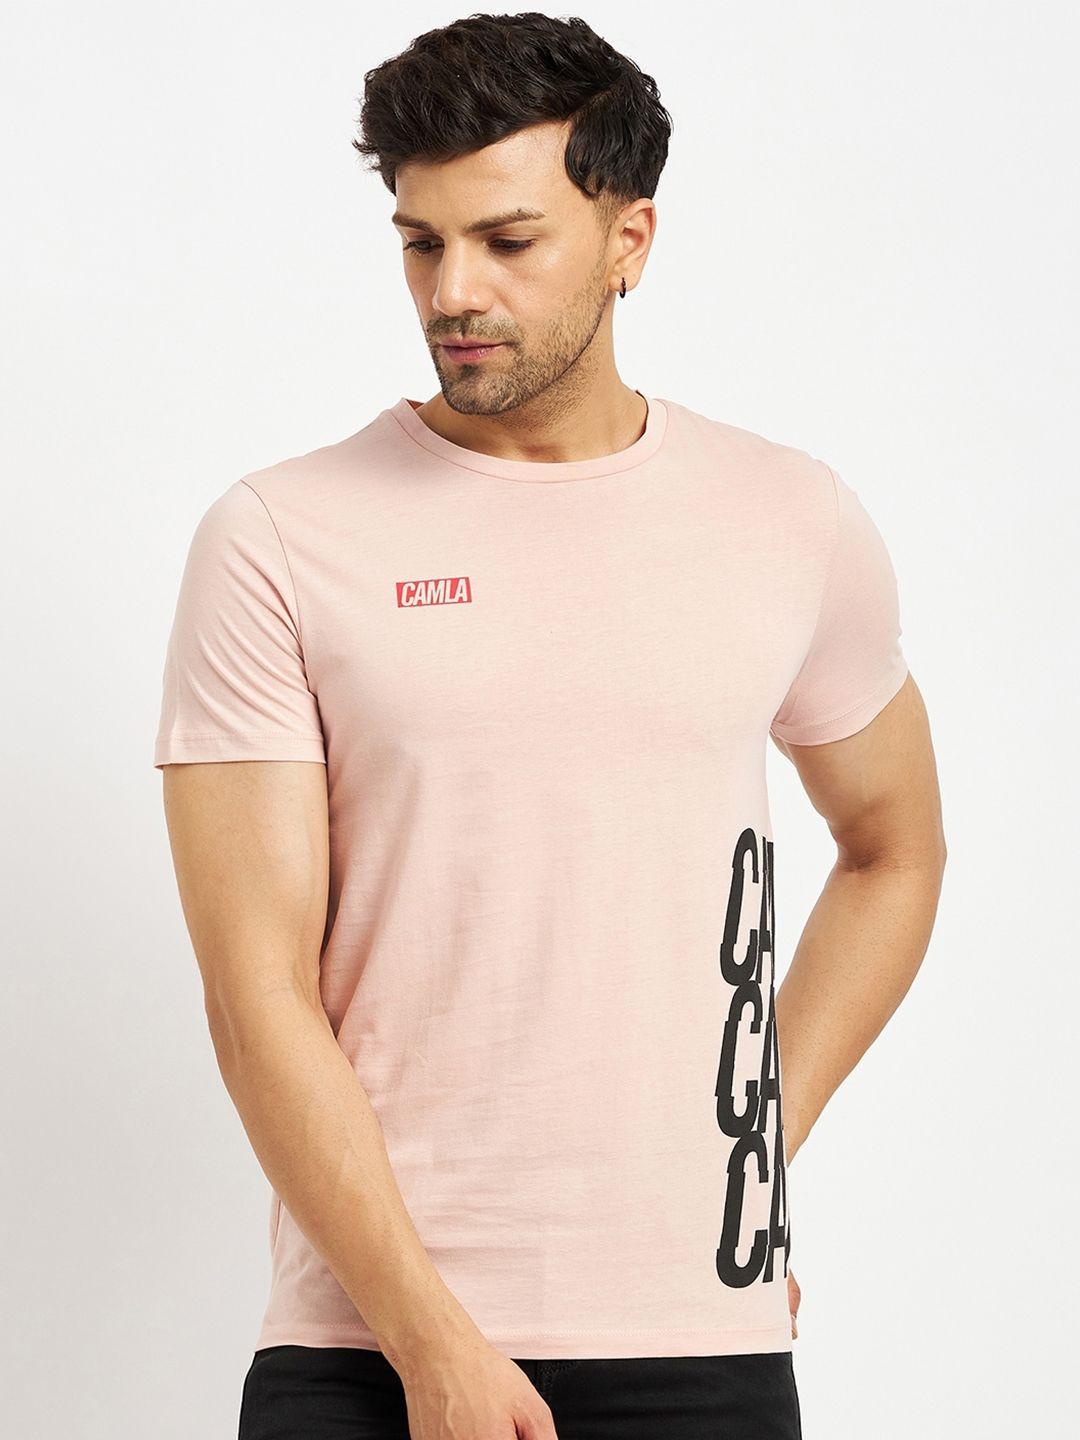 camla men pink typography printed applique t-shirt